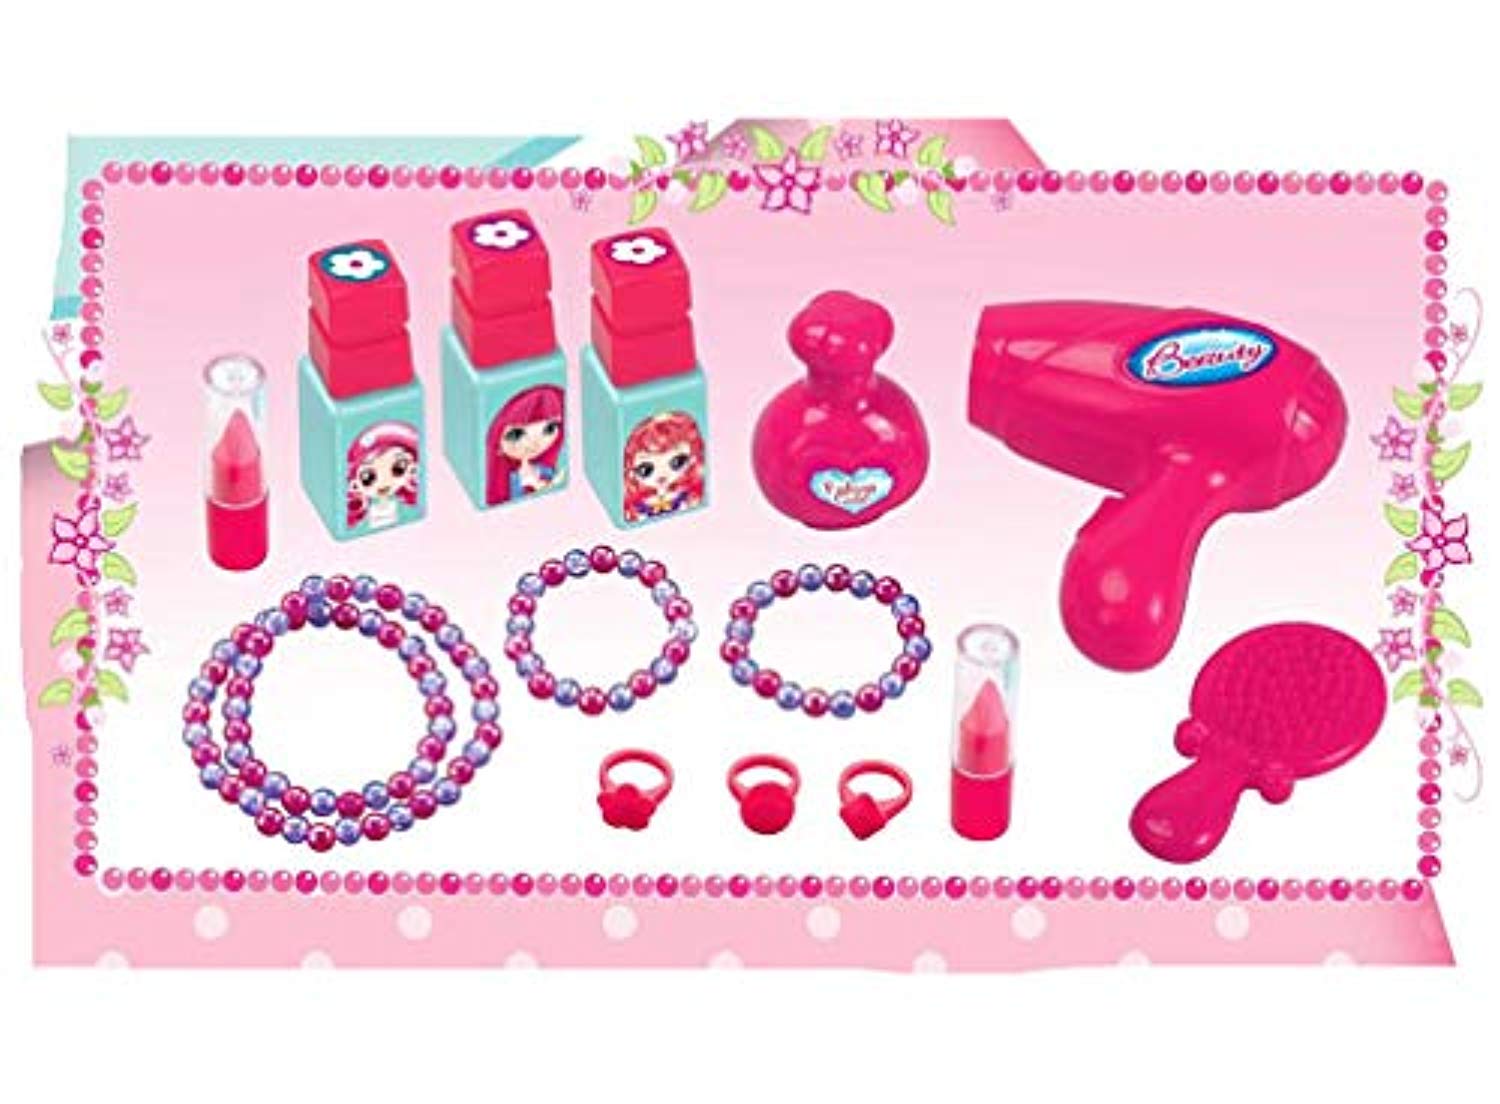 Bosonshop Pretend Play Kids Vanity Dressing Table Beauty Play Set Toy, Pink